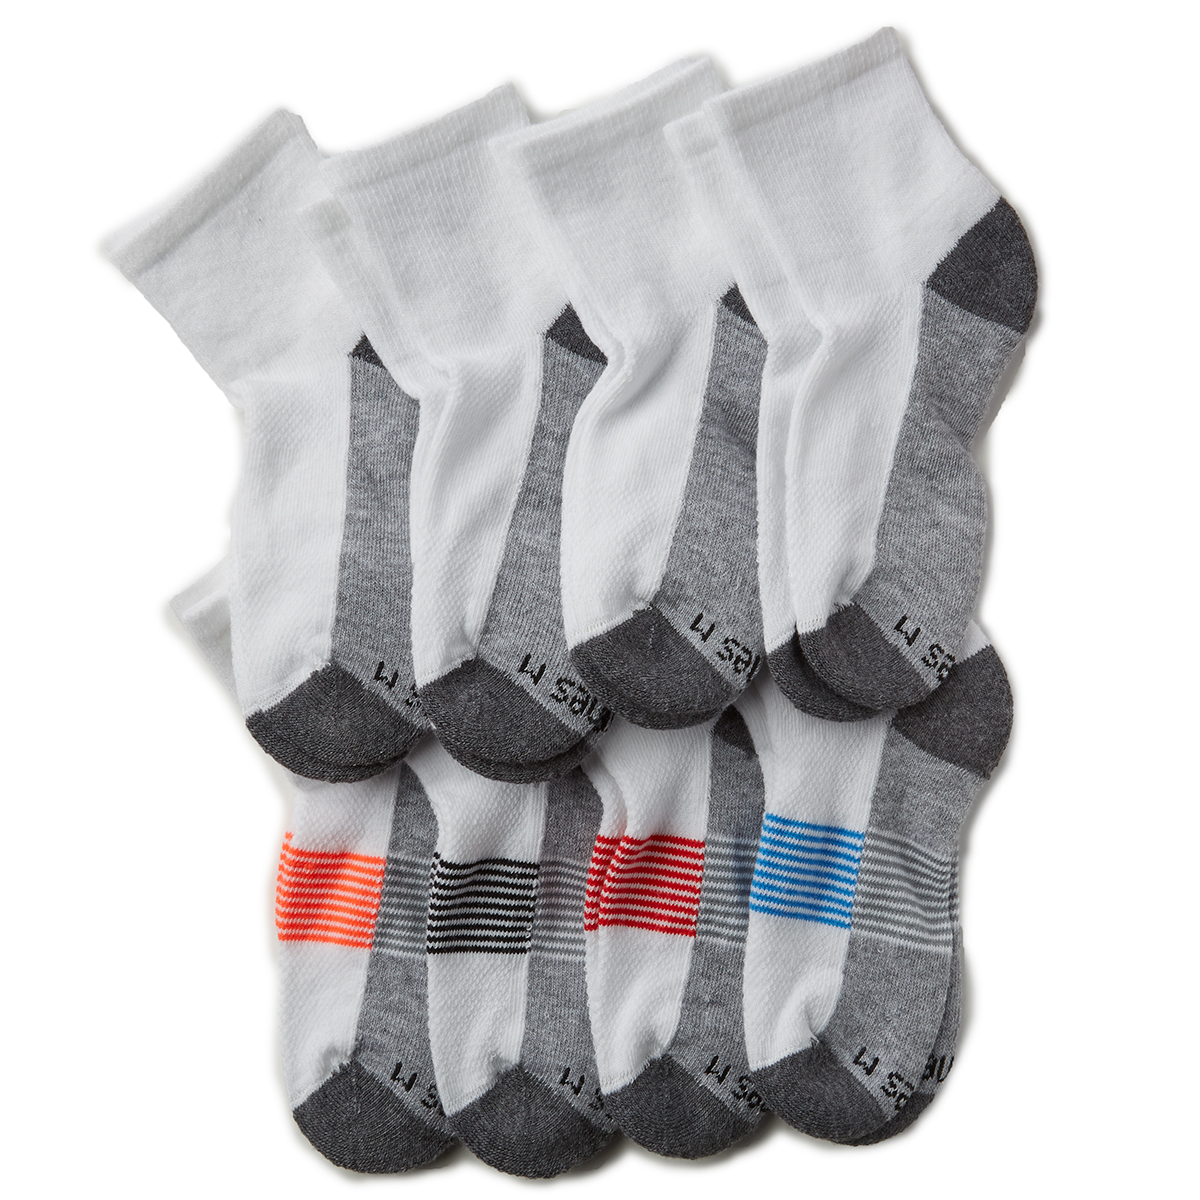 Hanes Big Boys' Ankle Socks, 8-Pack - White, M